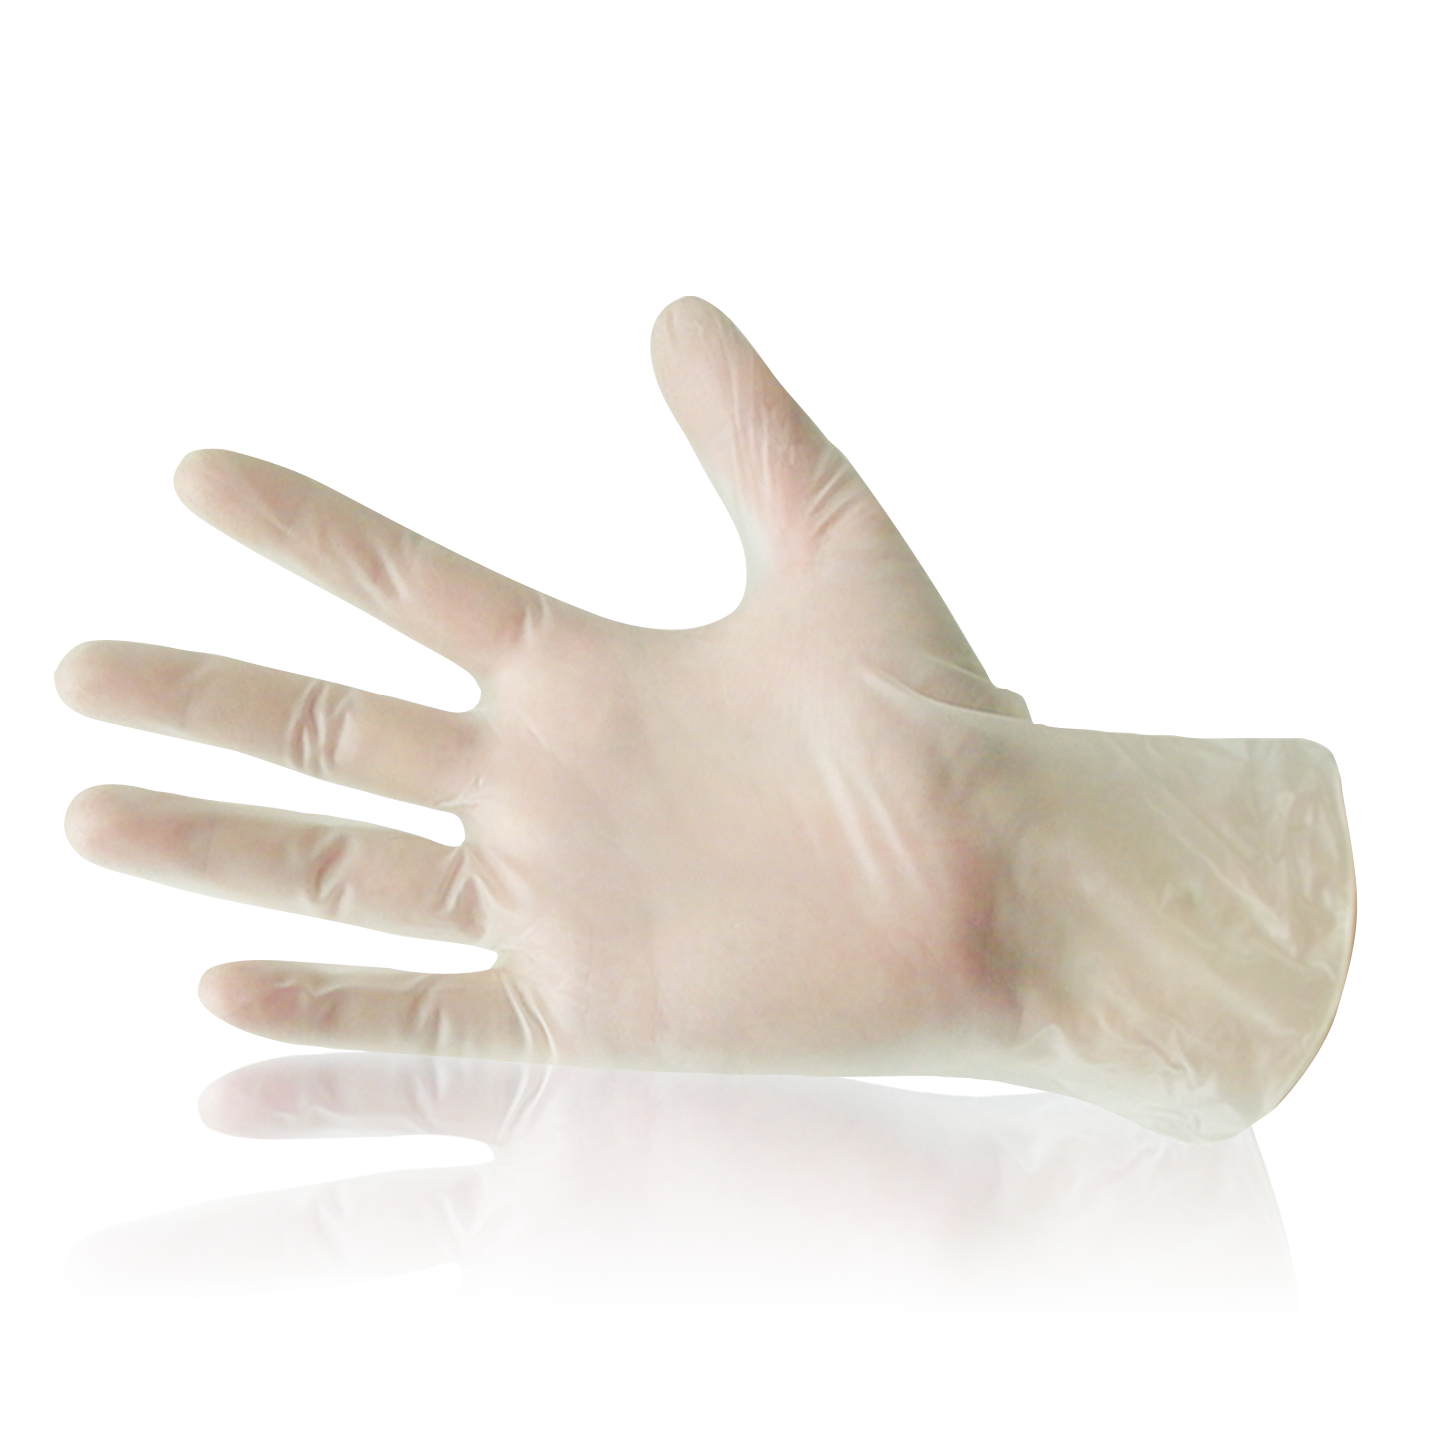 BAEHR Handschuhe Latex ECO, Größe XS 1 Pack (100 Stk.)